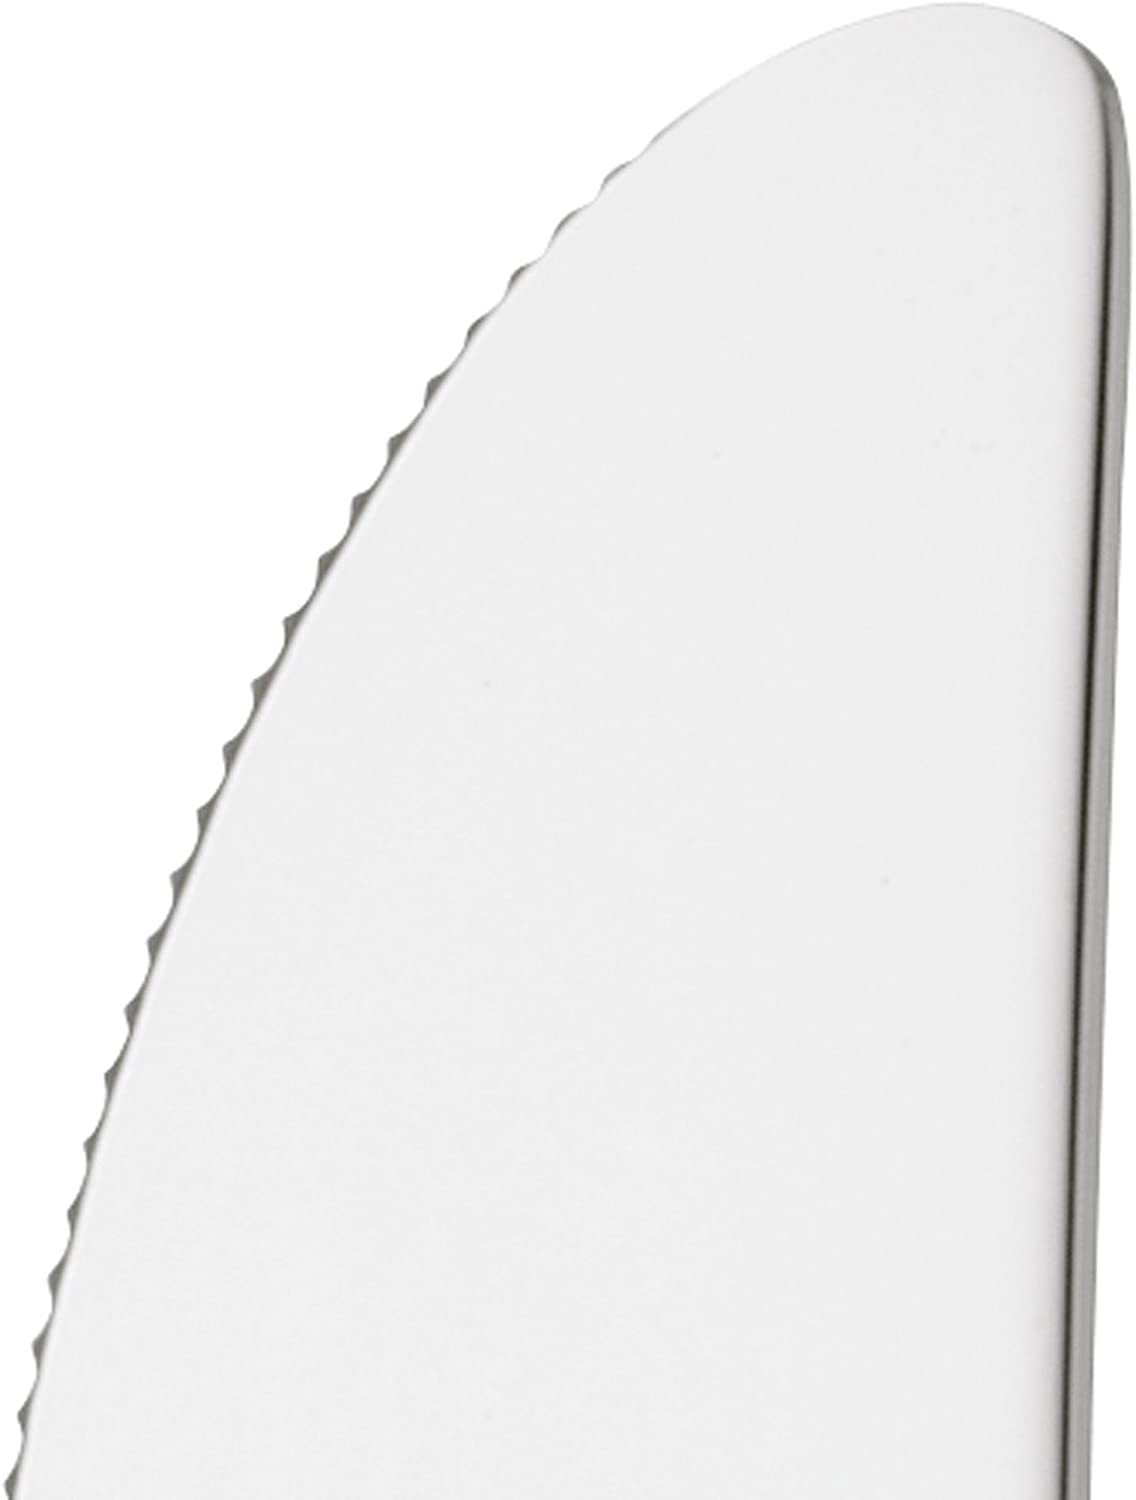 WMF PHILADELPHIA Table Knife Stainless Steel Polished NR 1166036044